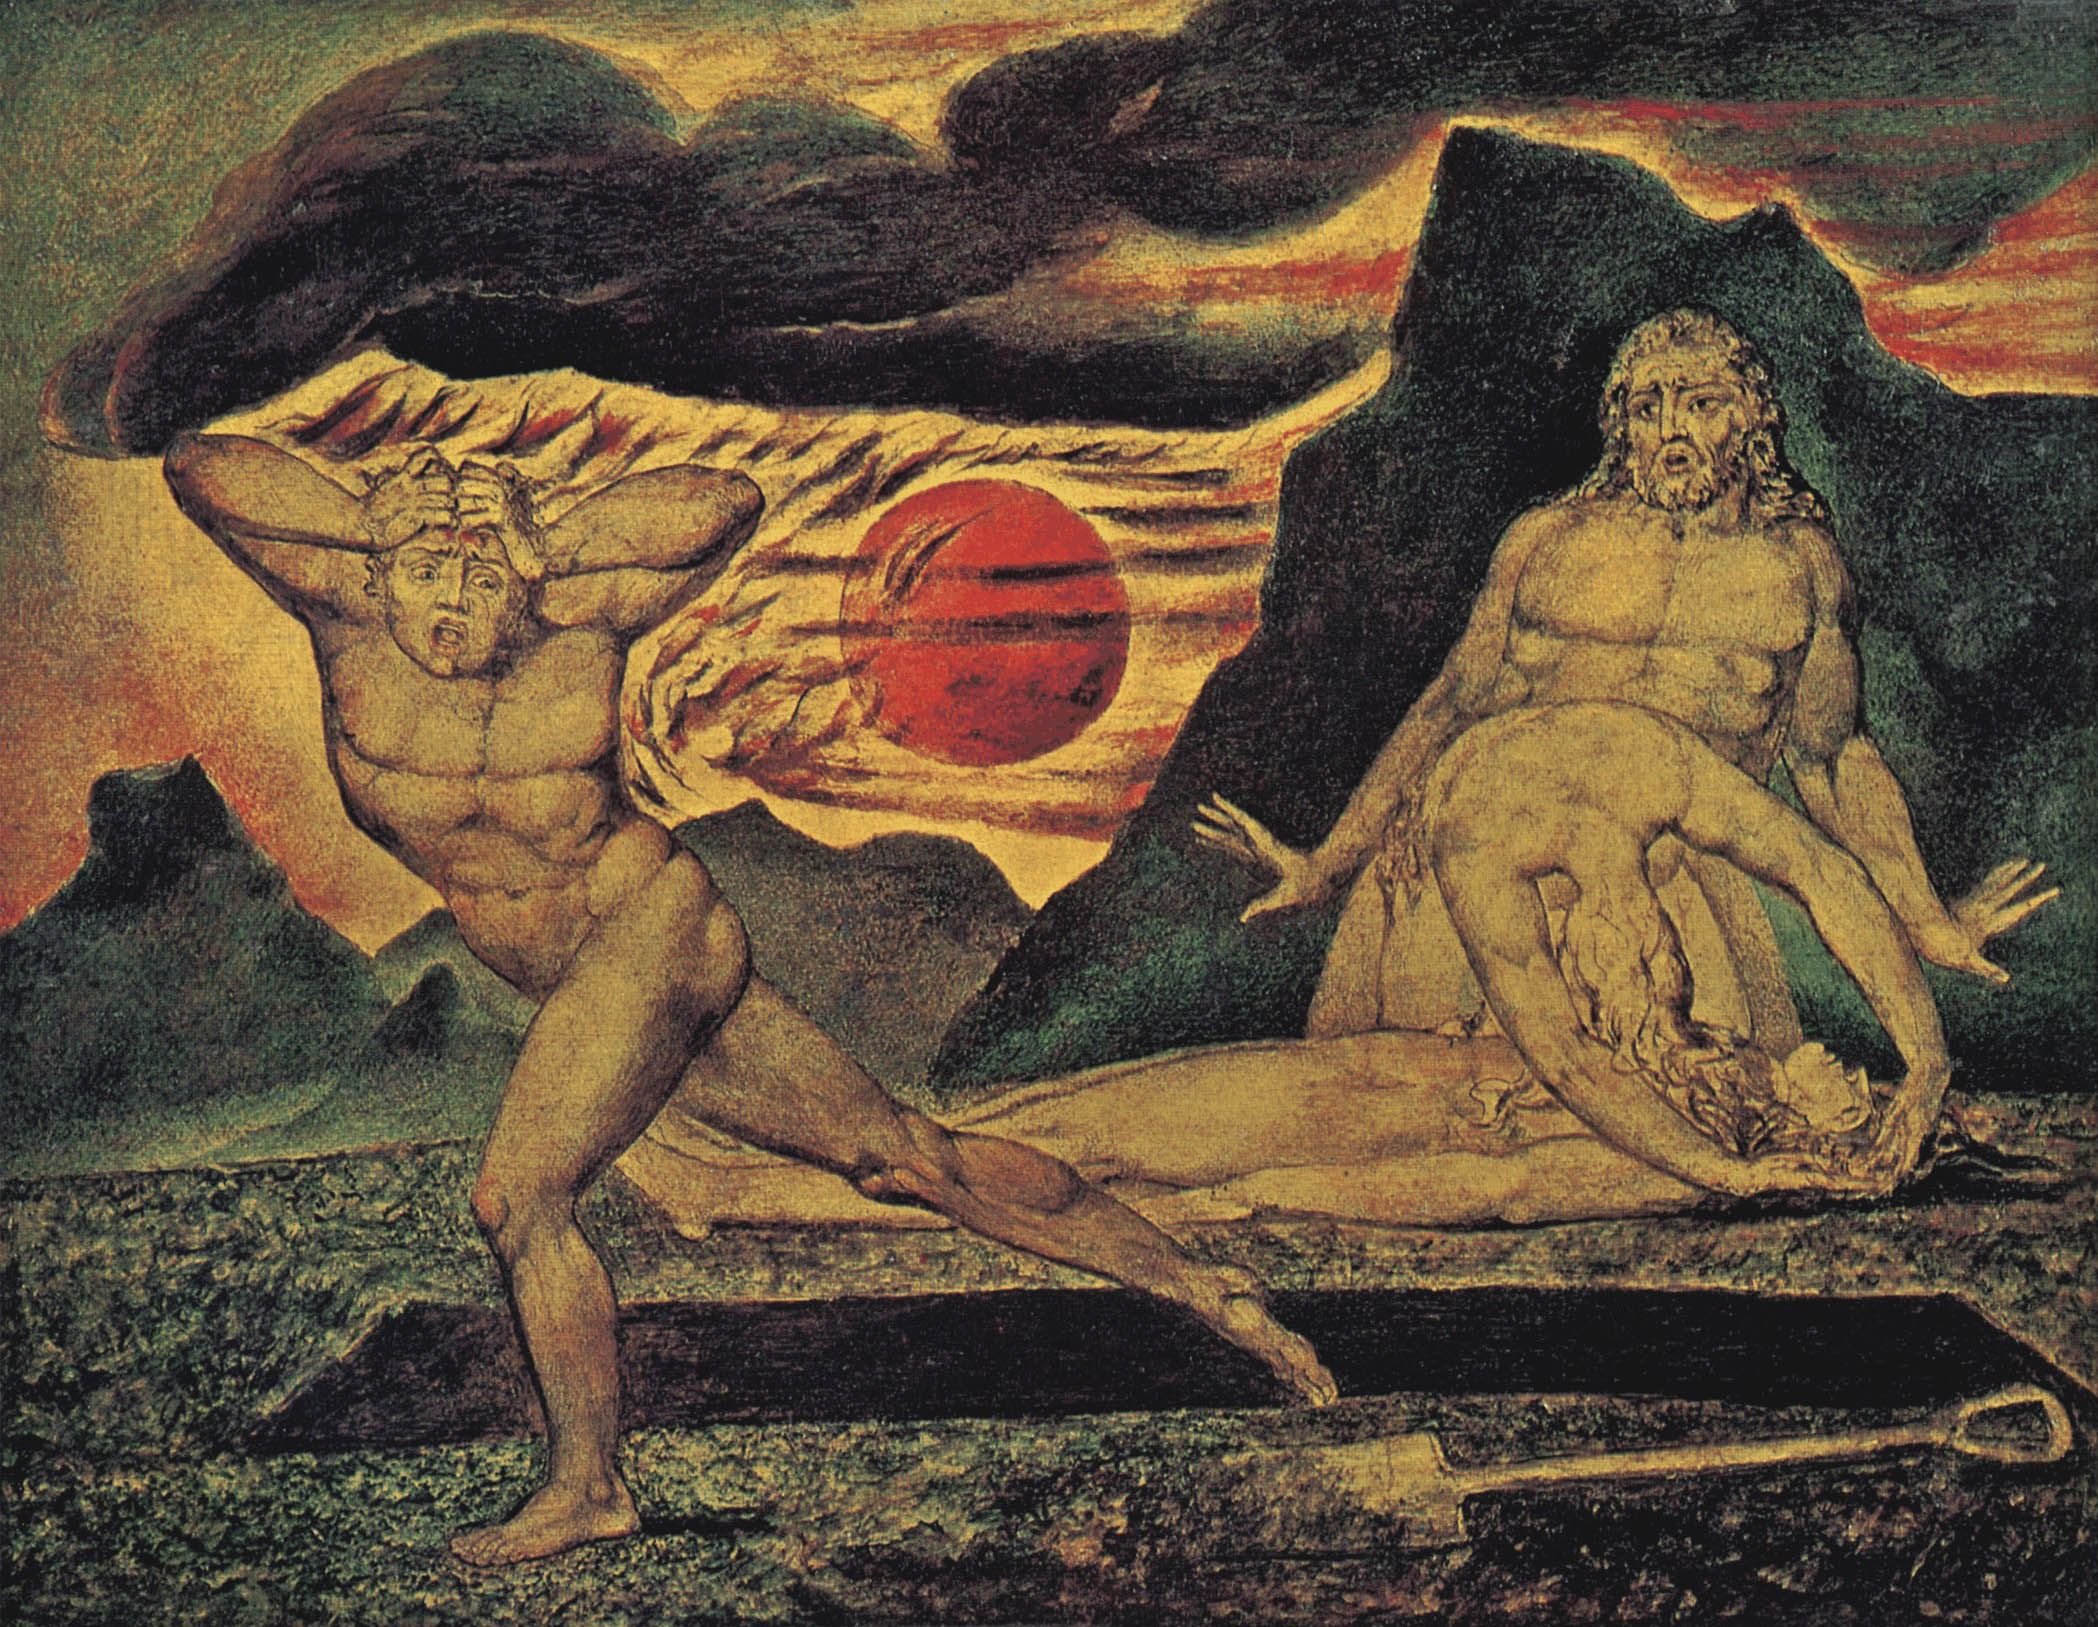 Death of Habel by William Blake